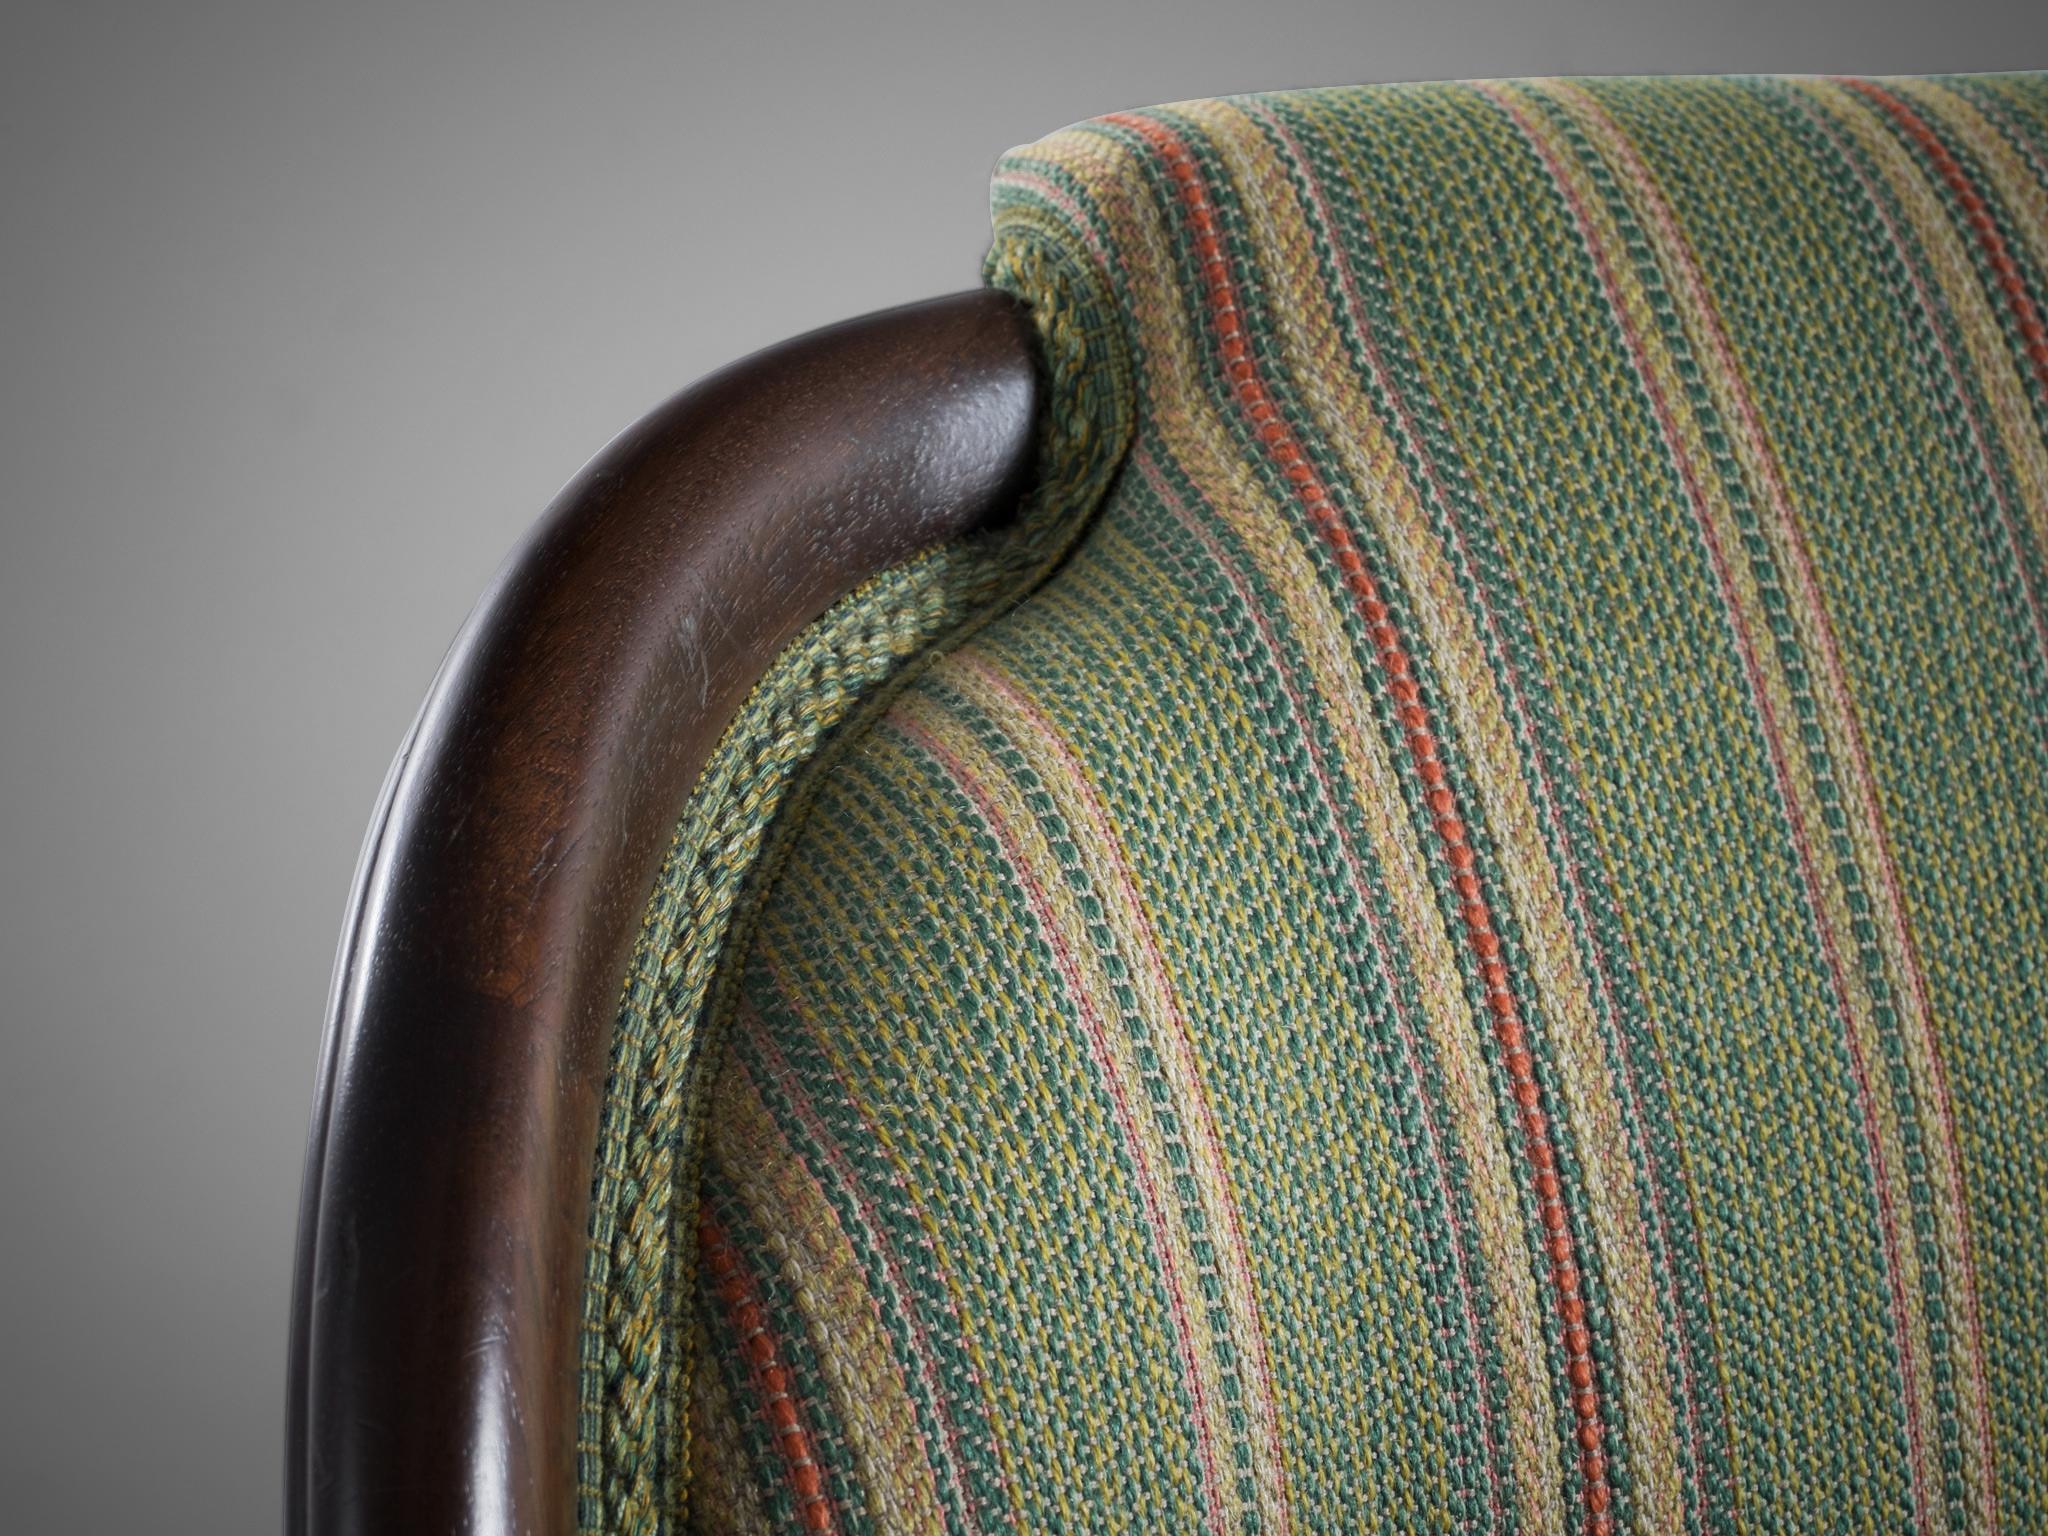 Scandinavian Modern Carl Malmsten Pair of Lounge Chairs with Original Upholstery 